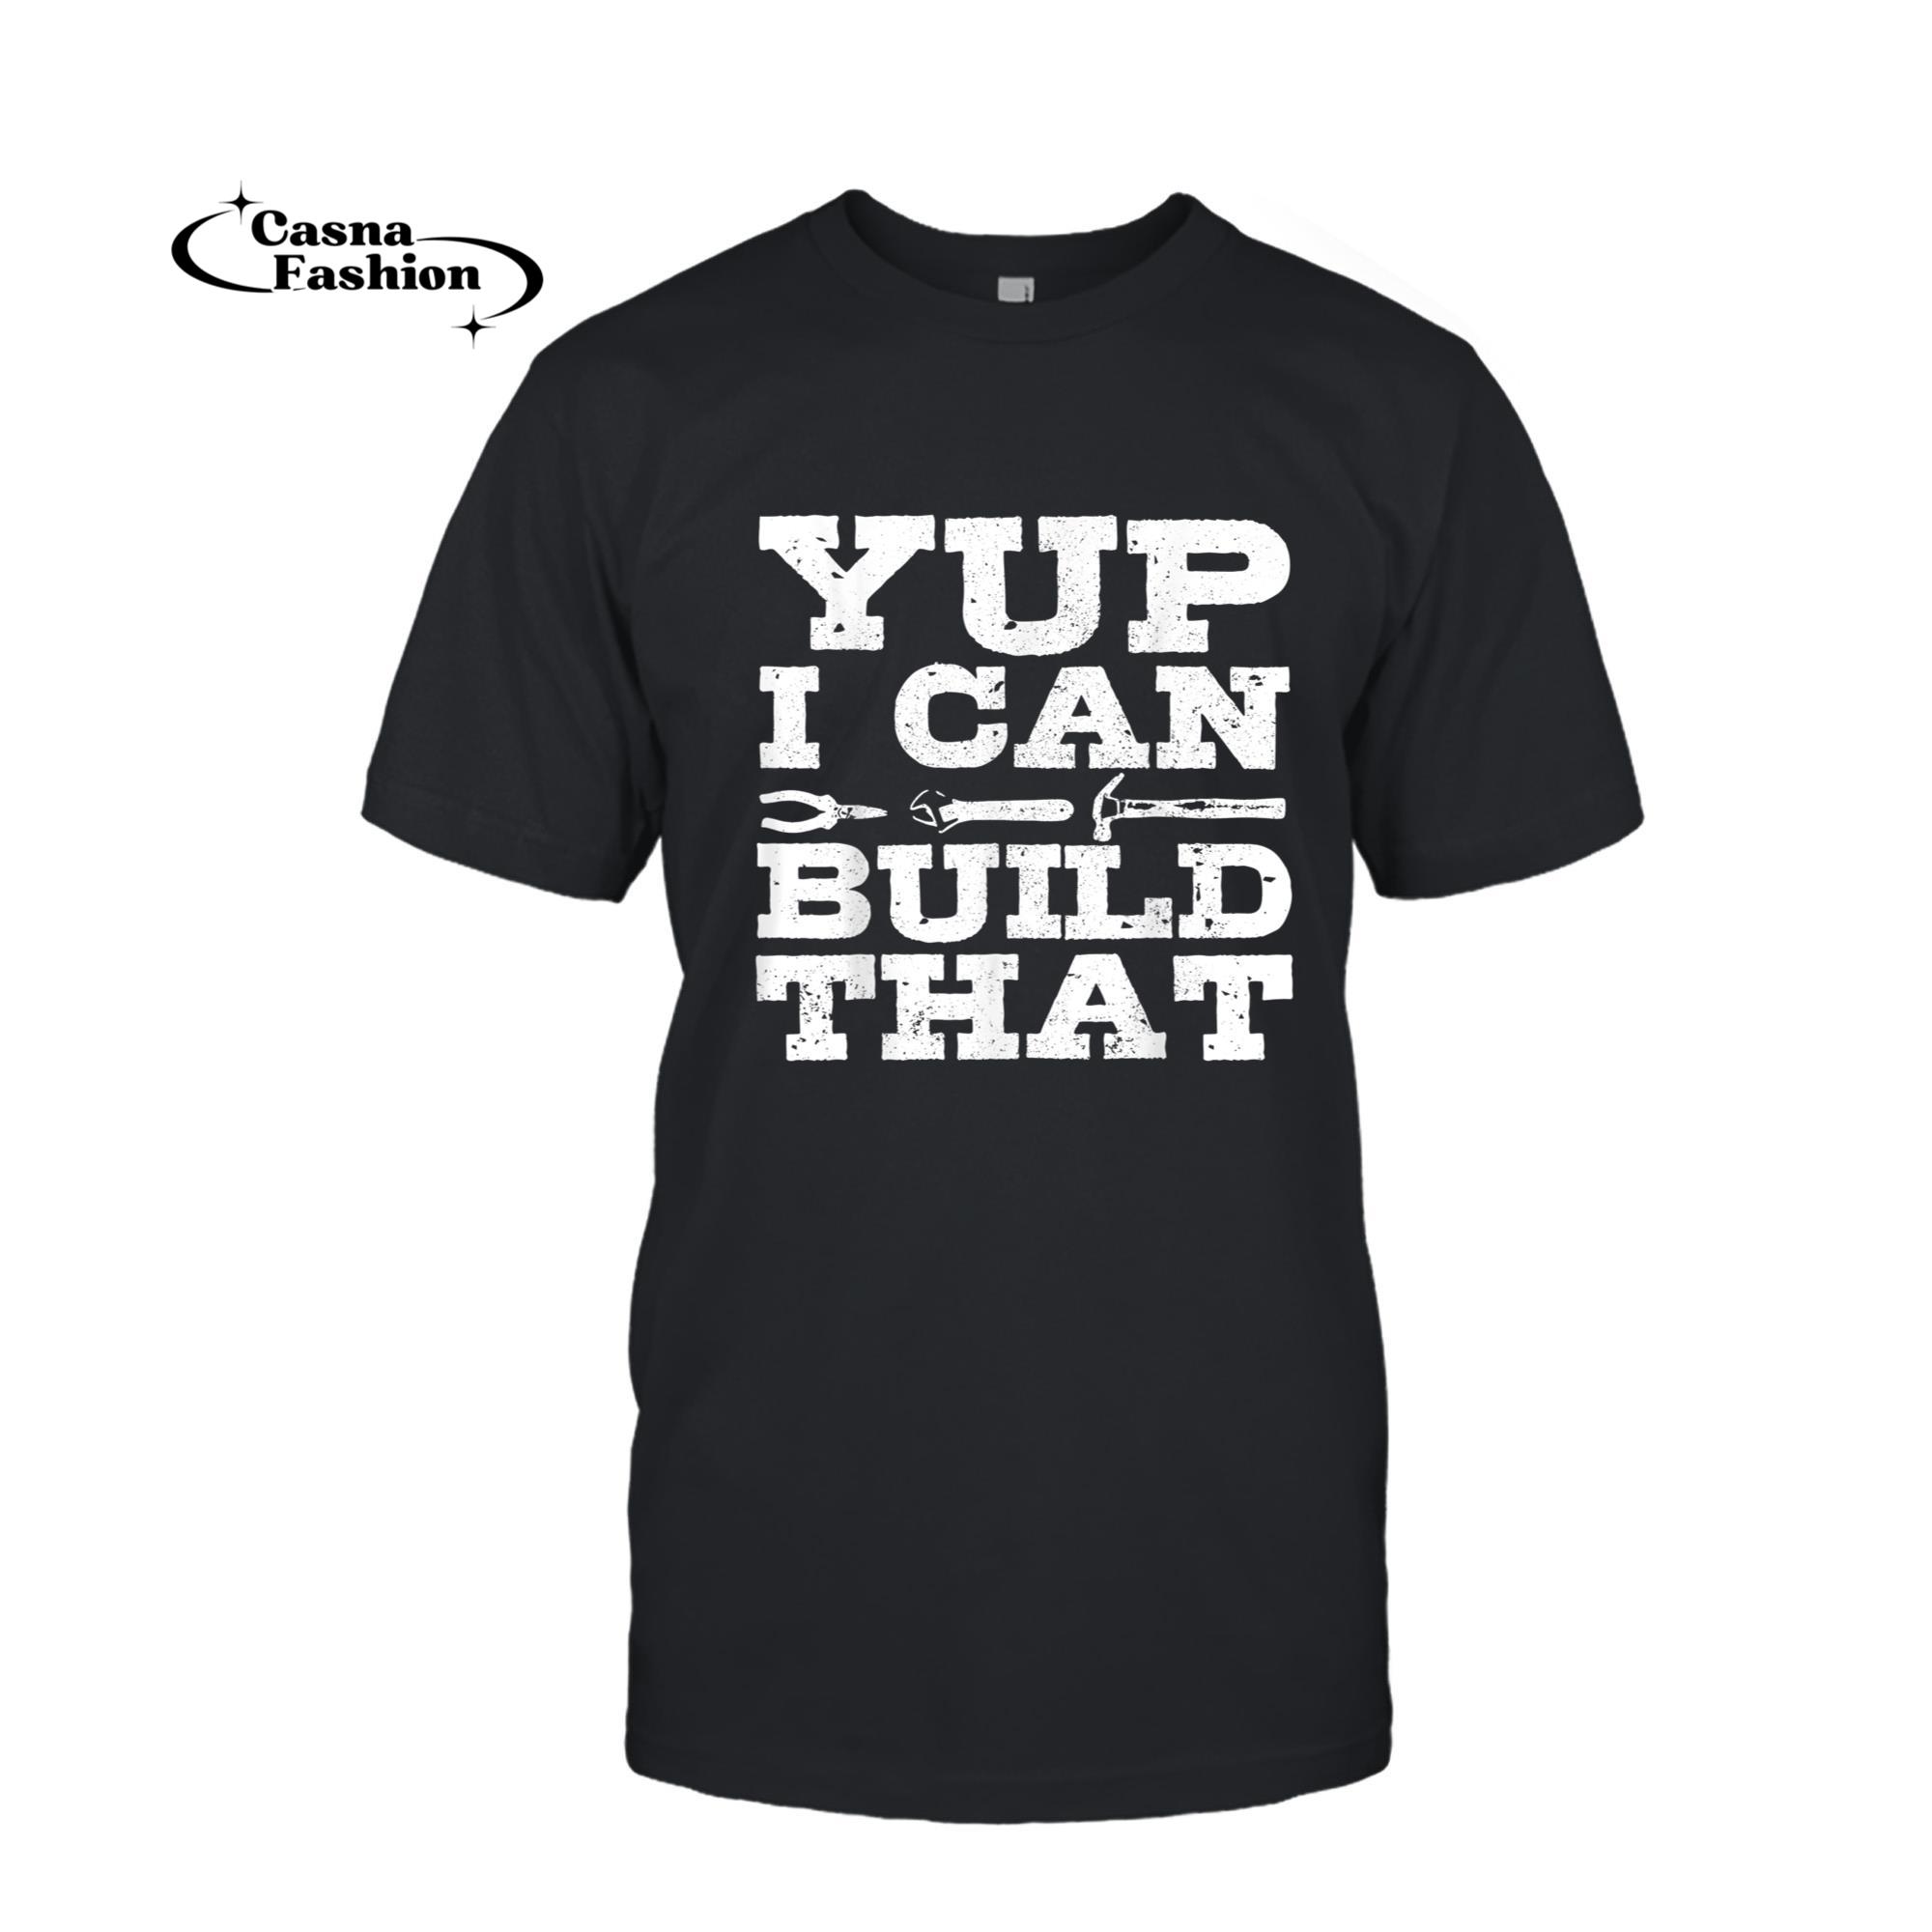 casnafashion_T-shirt_Yup I Can Build That Carpenter Woodworker DIY Craftsman Gift T-Shirt_T-shirt_Black